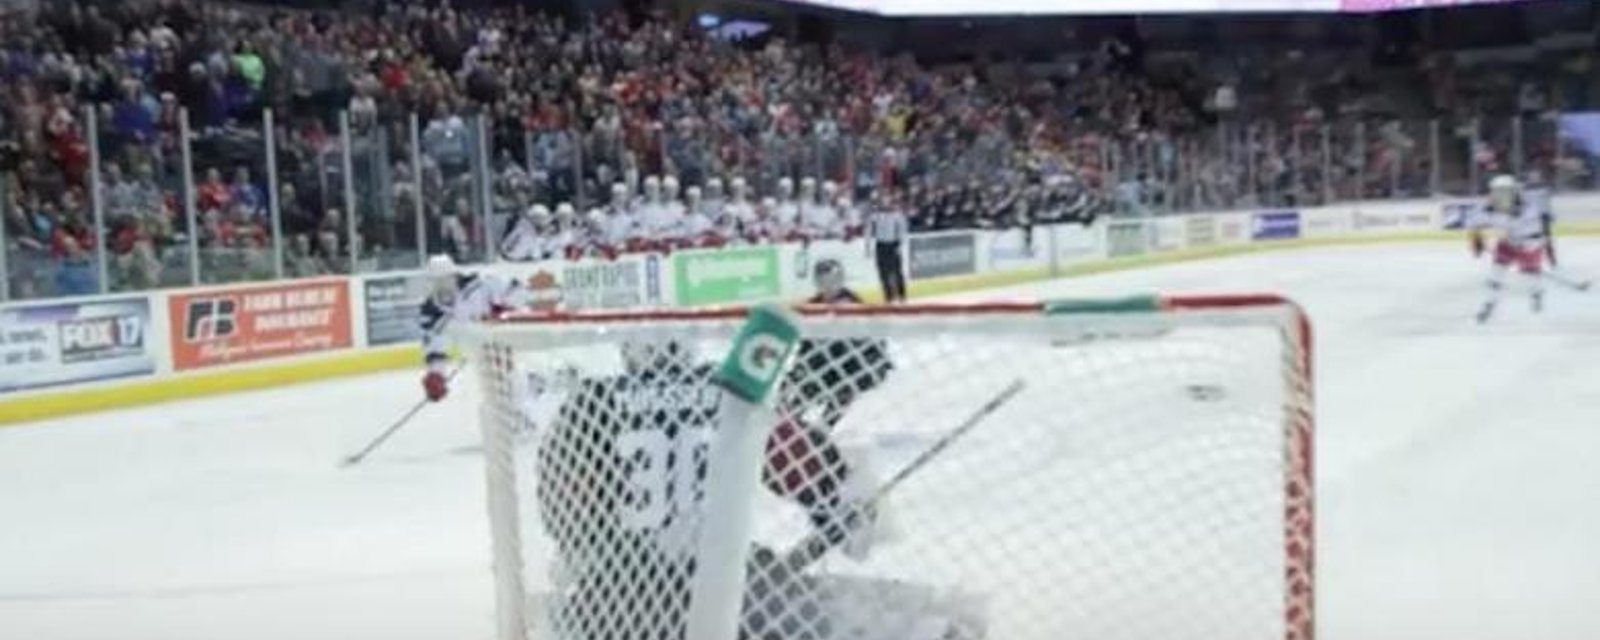 Must See: AHL defenseman's shot goes through the net!